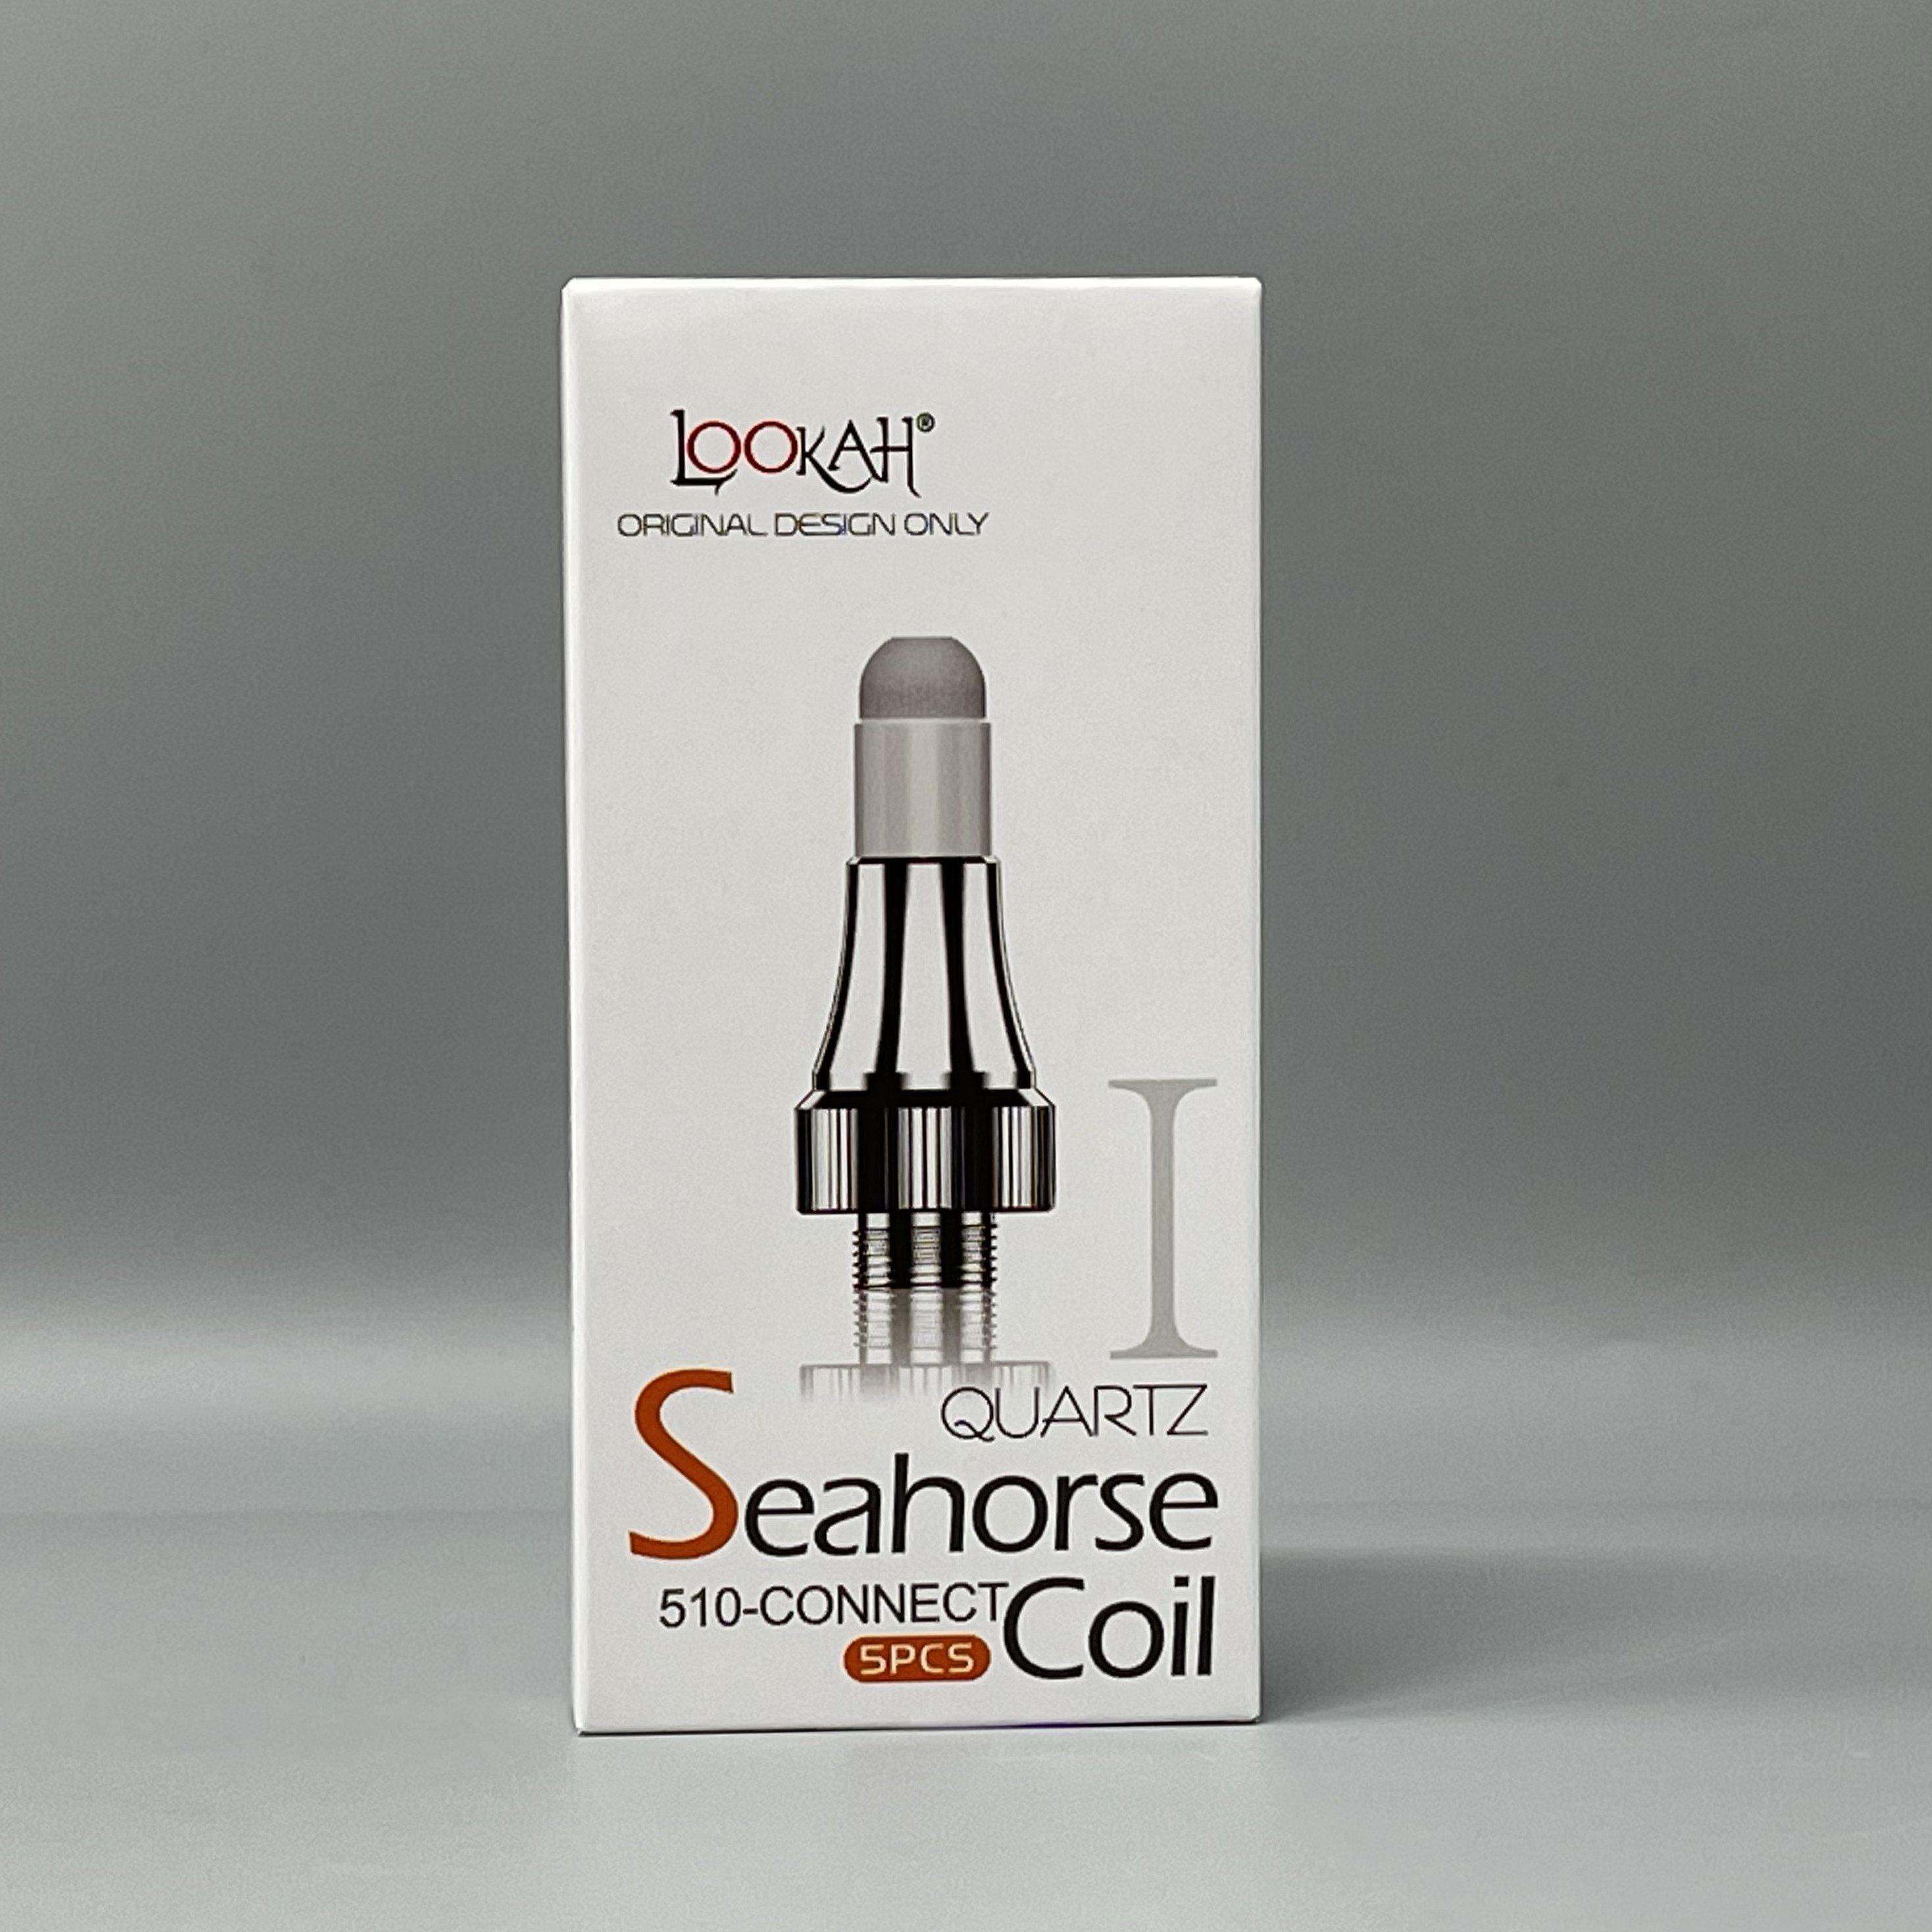 Lookah Seahorse 2.0 Coil Ceramic Tube Tip Replacement